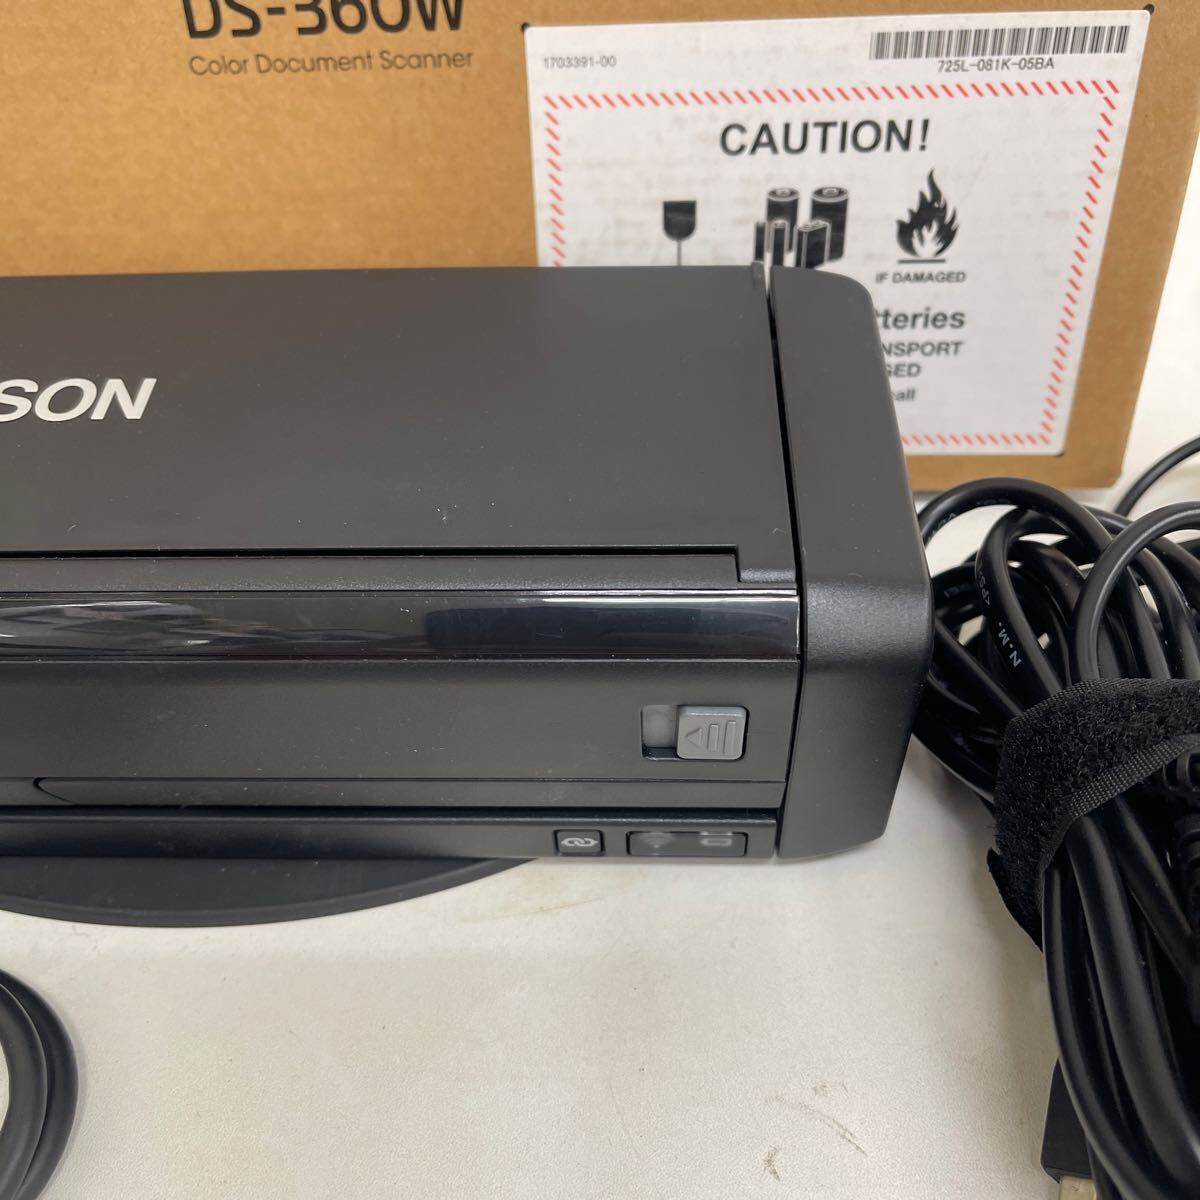 Y324. 9. EPSON Epson DS-360W беспроводной мобильный сканер плюс EPSON Epson DS-40 мобильный принтер комплект 